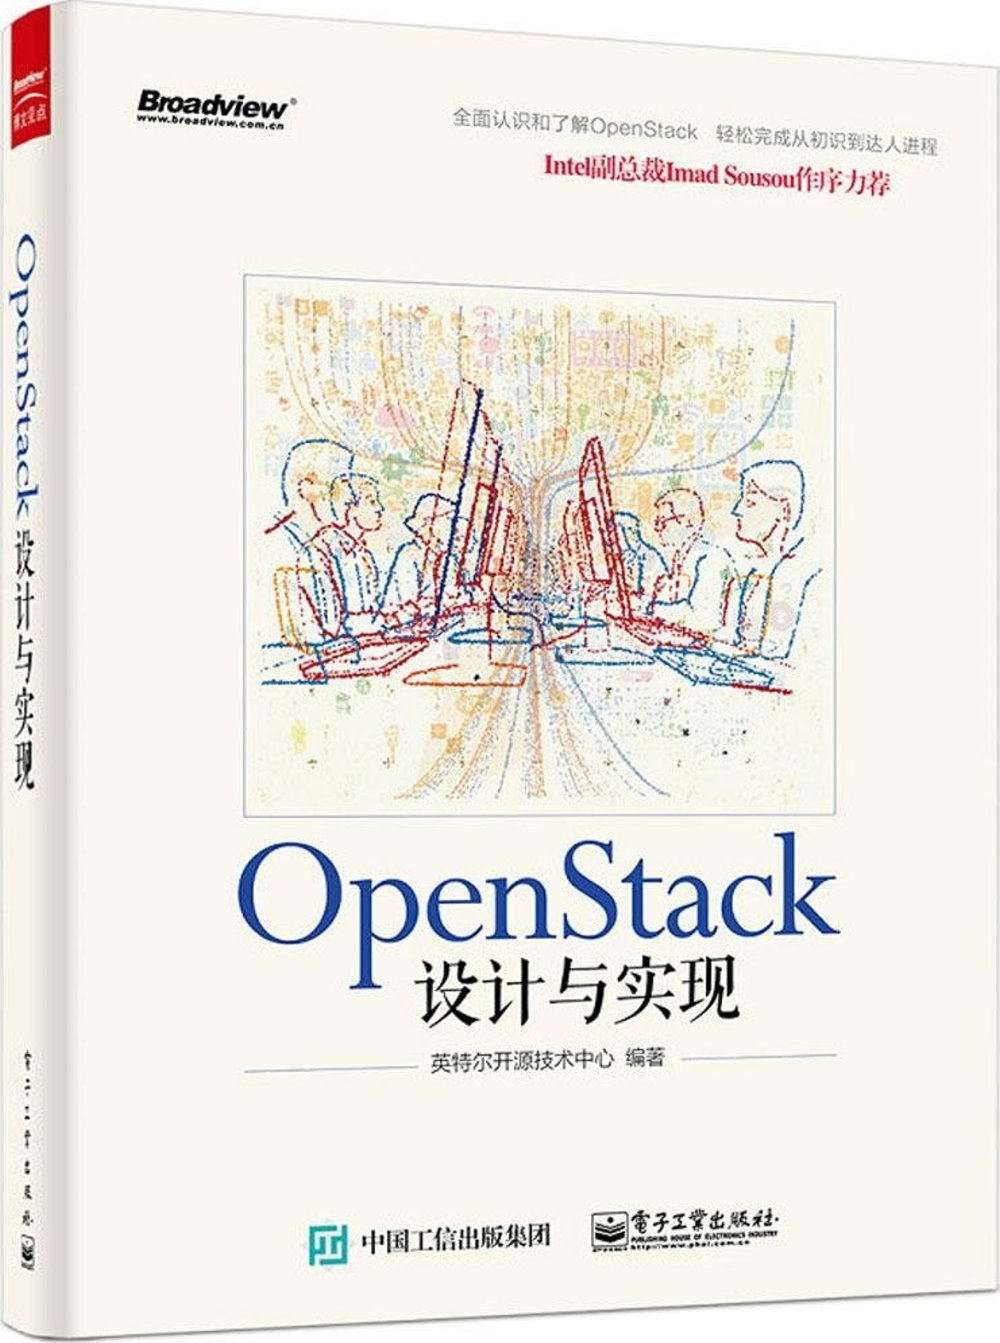 Open Stack設計與實現